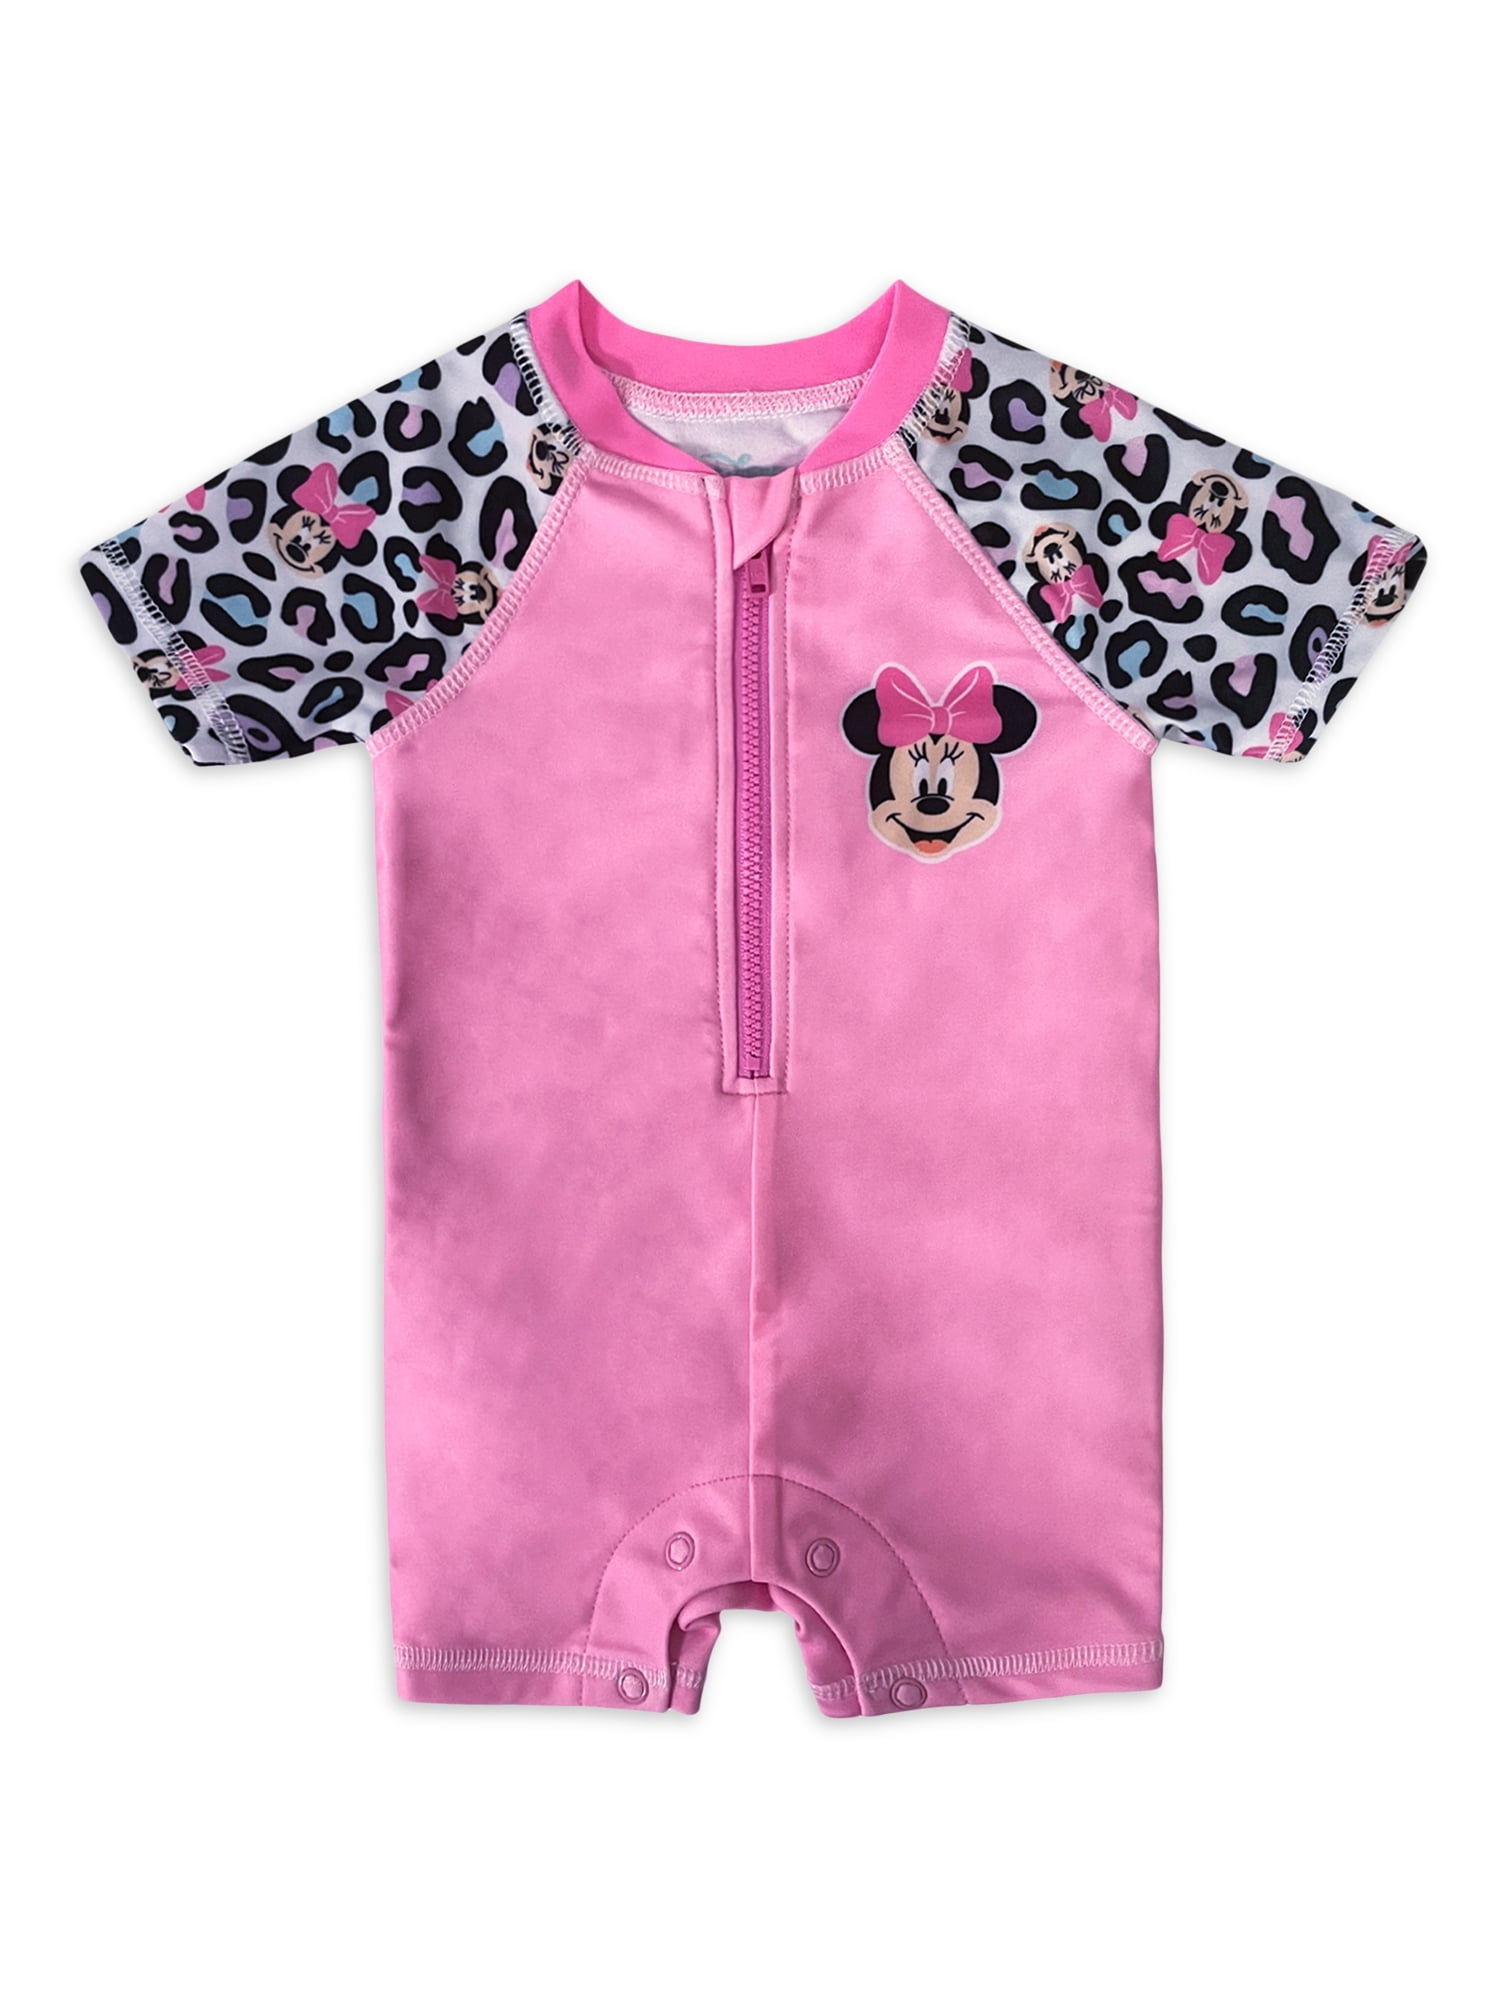 Minnie Mouse Rashguard Personalized Swim Suit Shirt Girl 